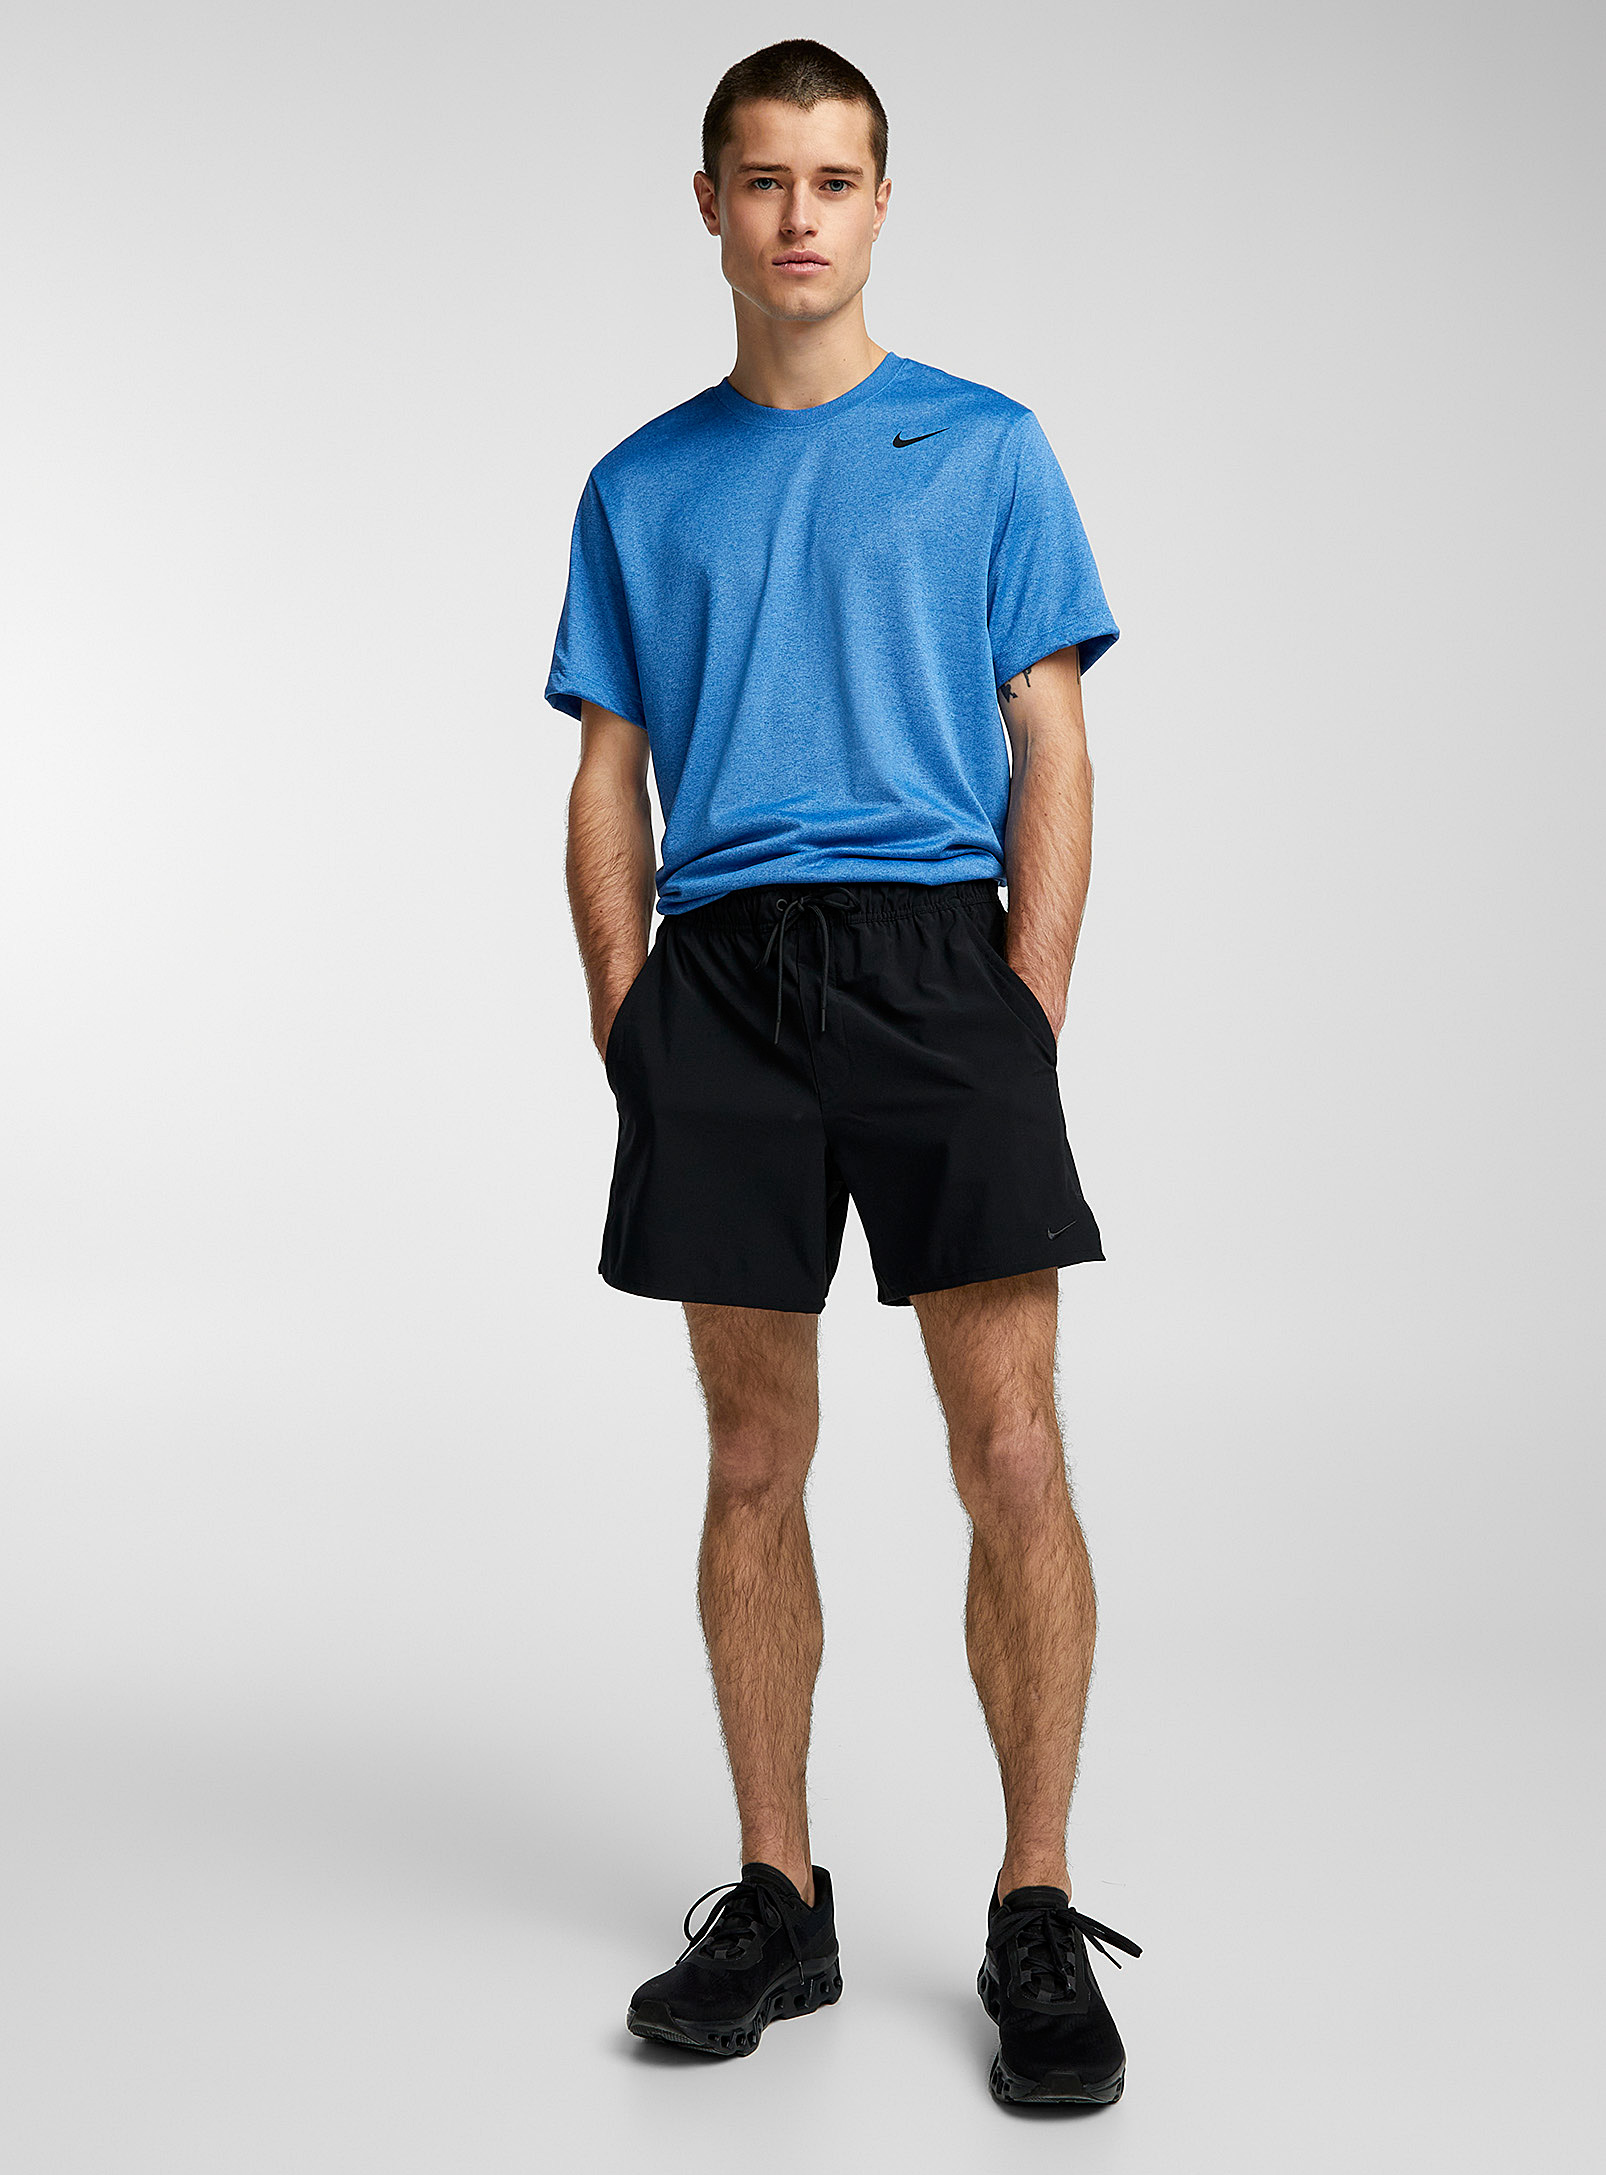 Nike - Men's Stretch 5-inch short